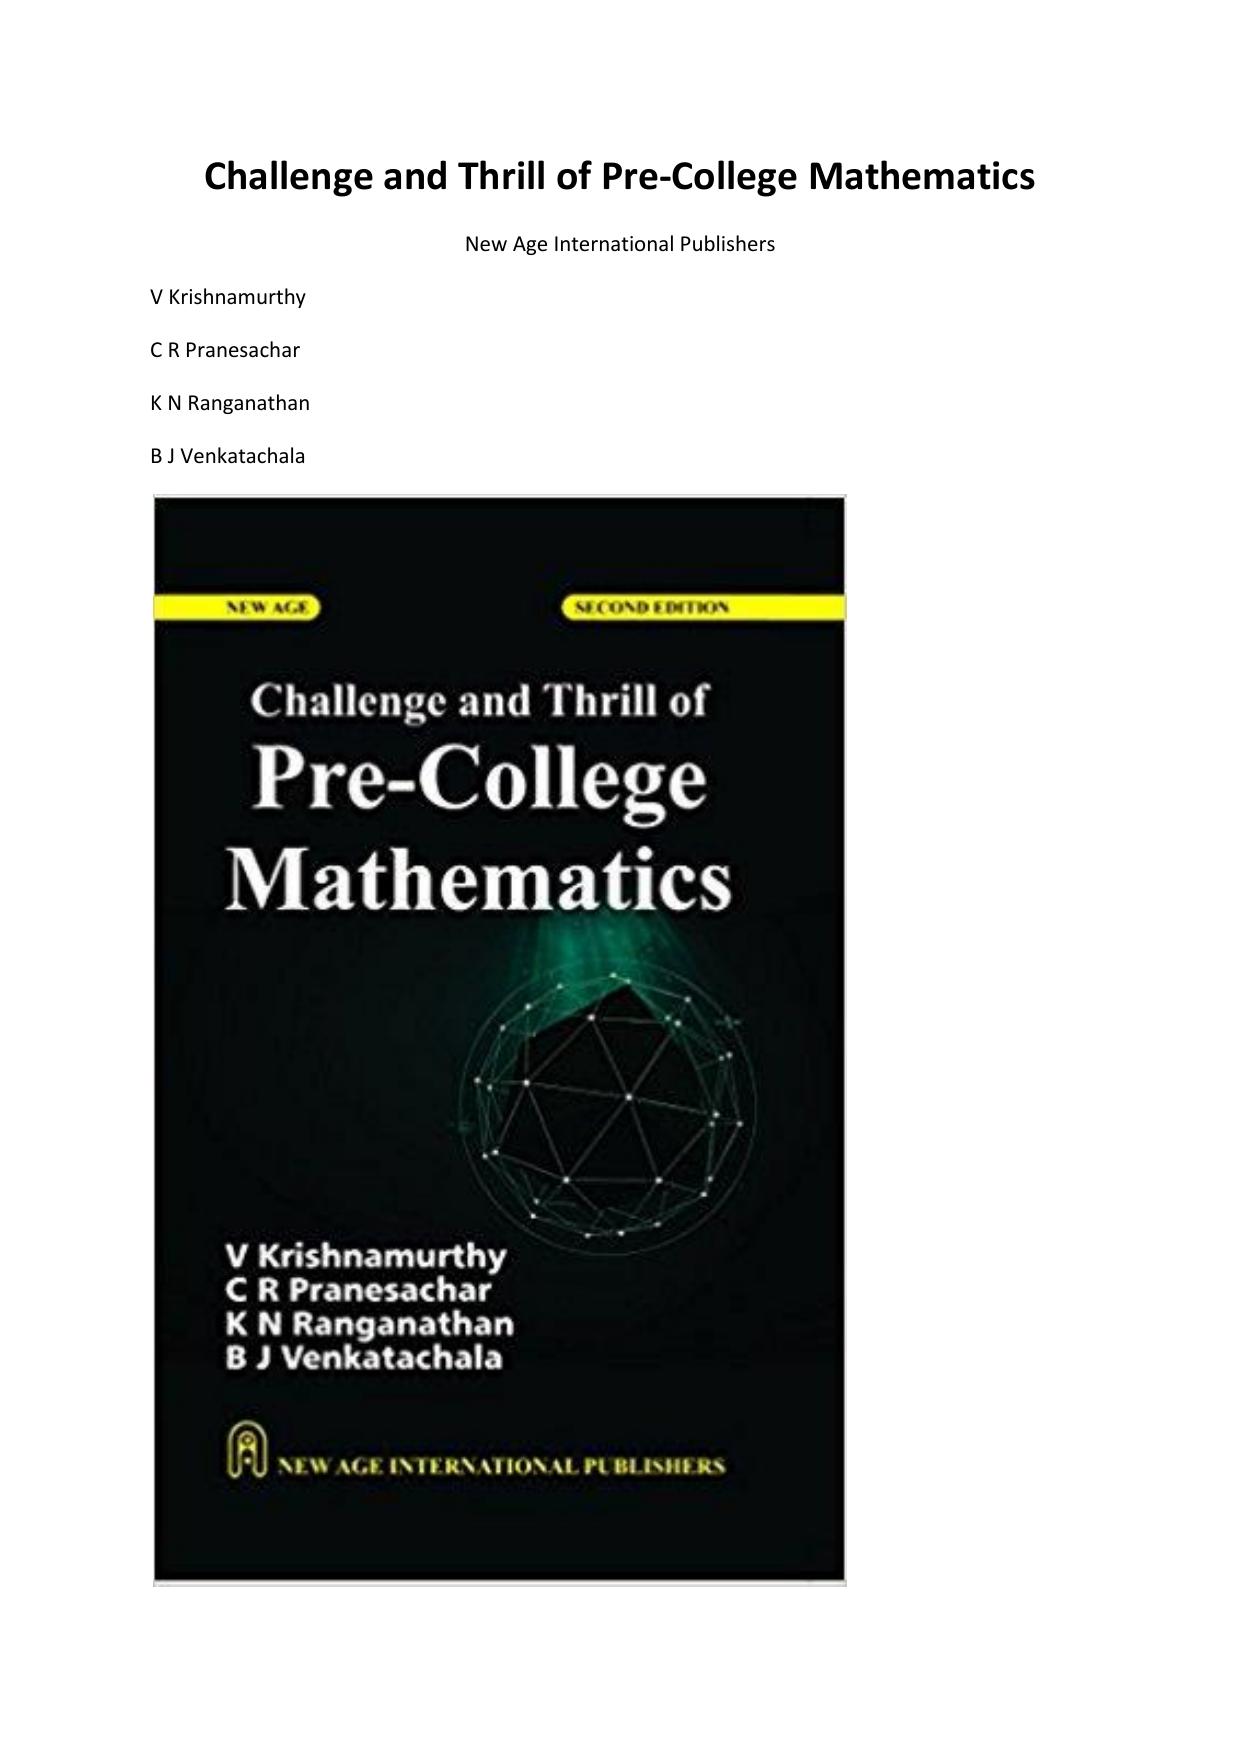 Challenge and Thrill of Pre-College Mathematics 2018